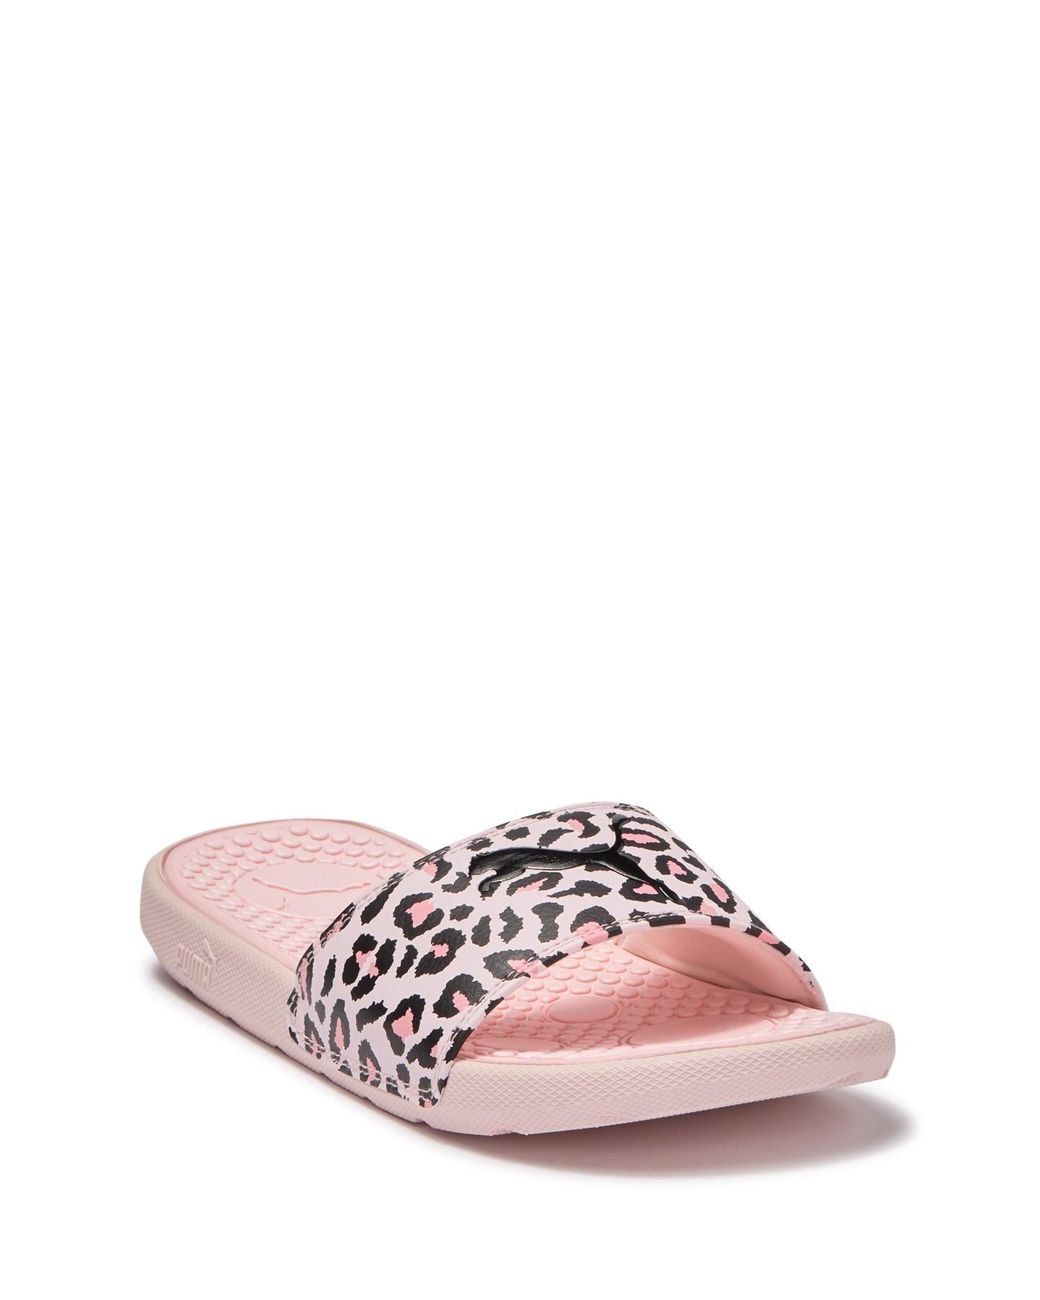 PUMA Cool Cat Leopard Slide Sandal in Pink | Lyst